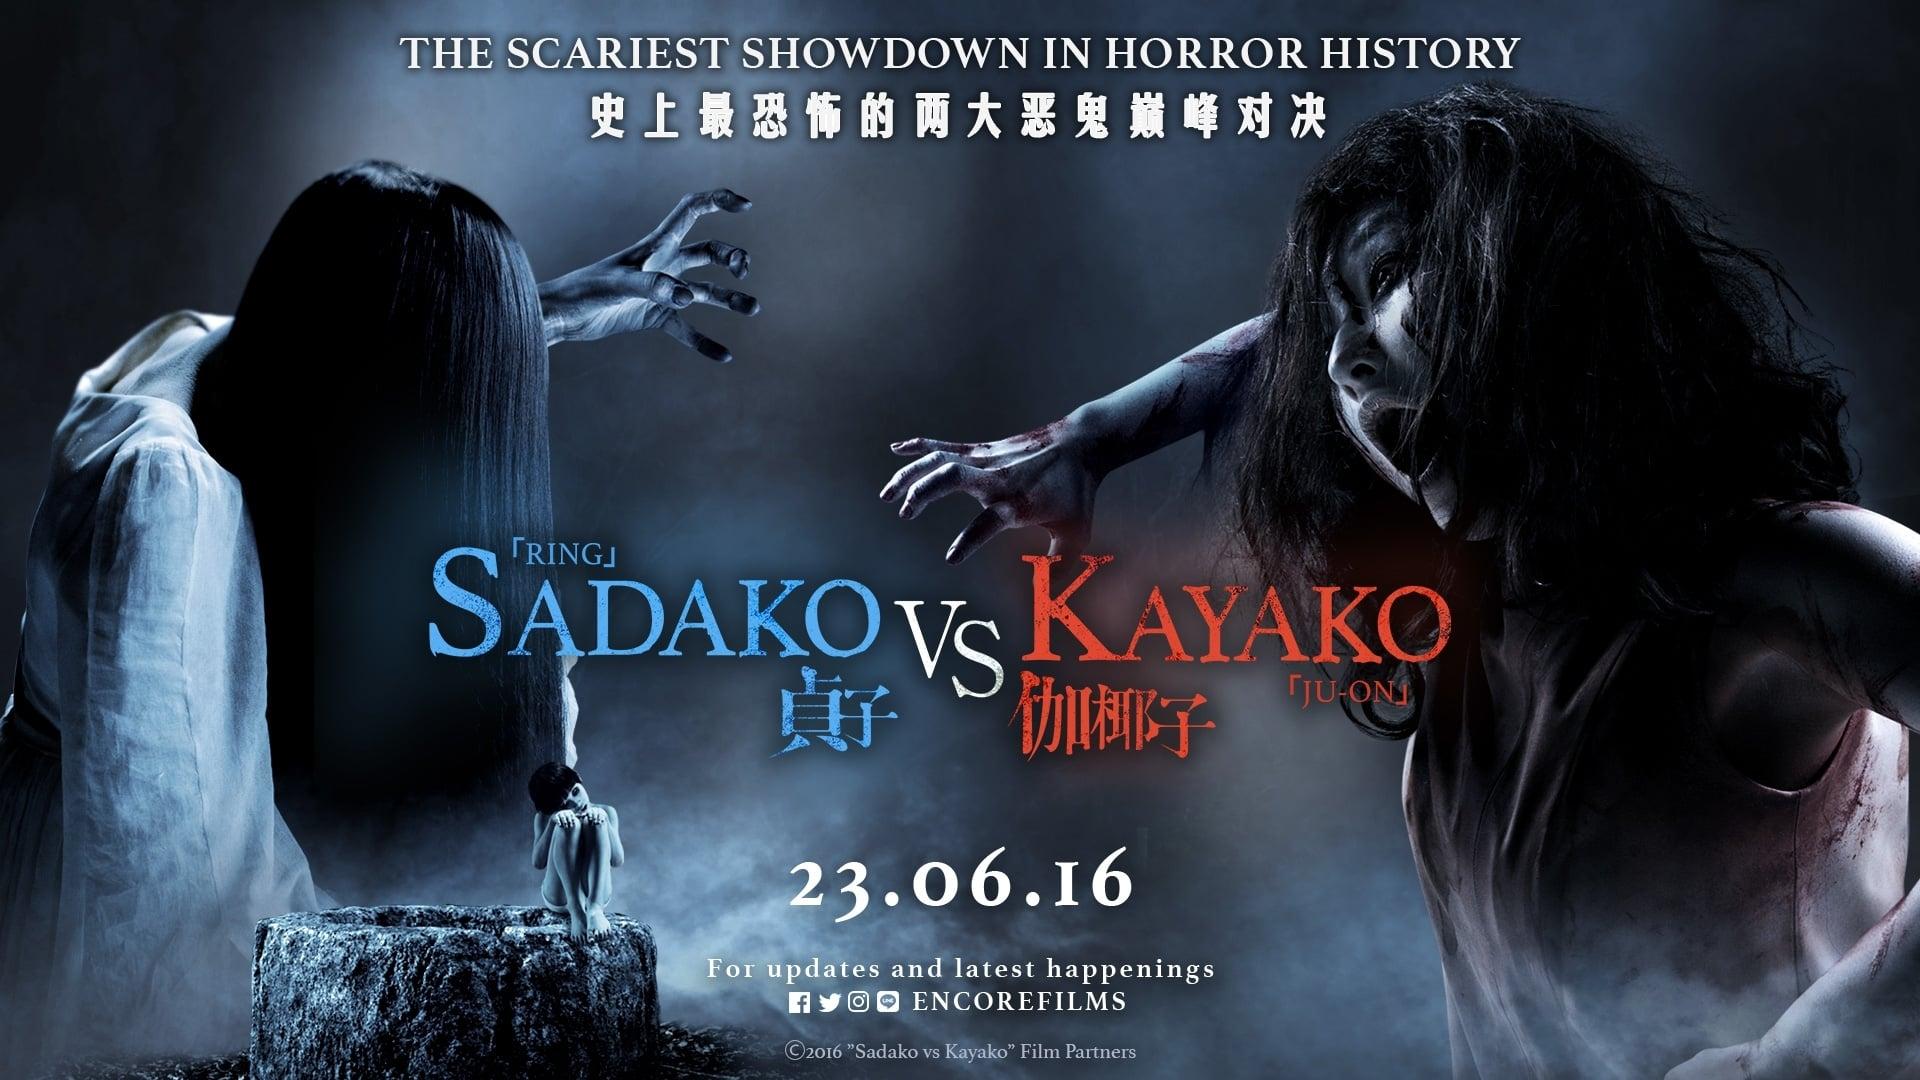 Bunshinsaba vs Sadako backdrop